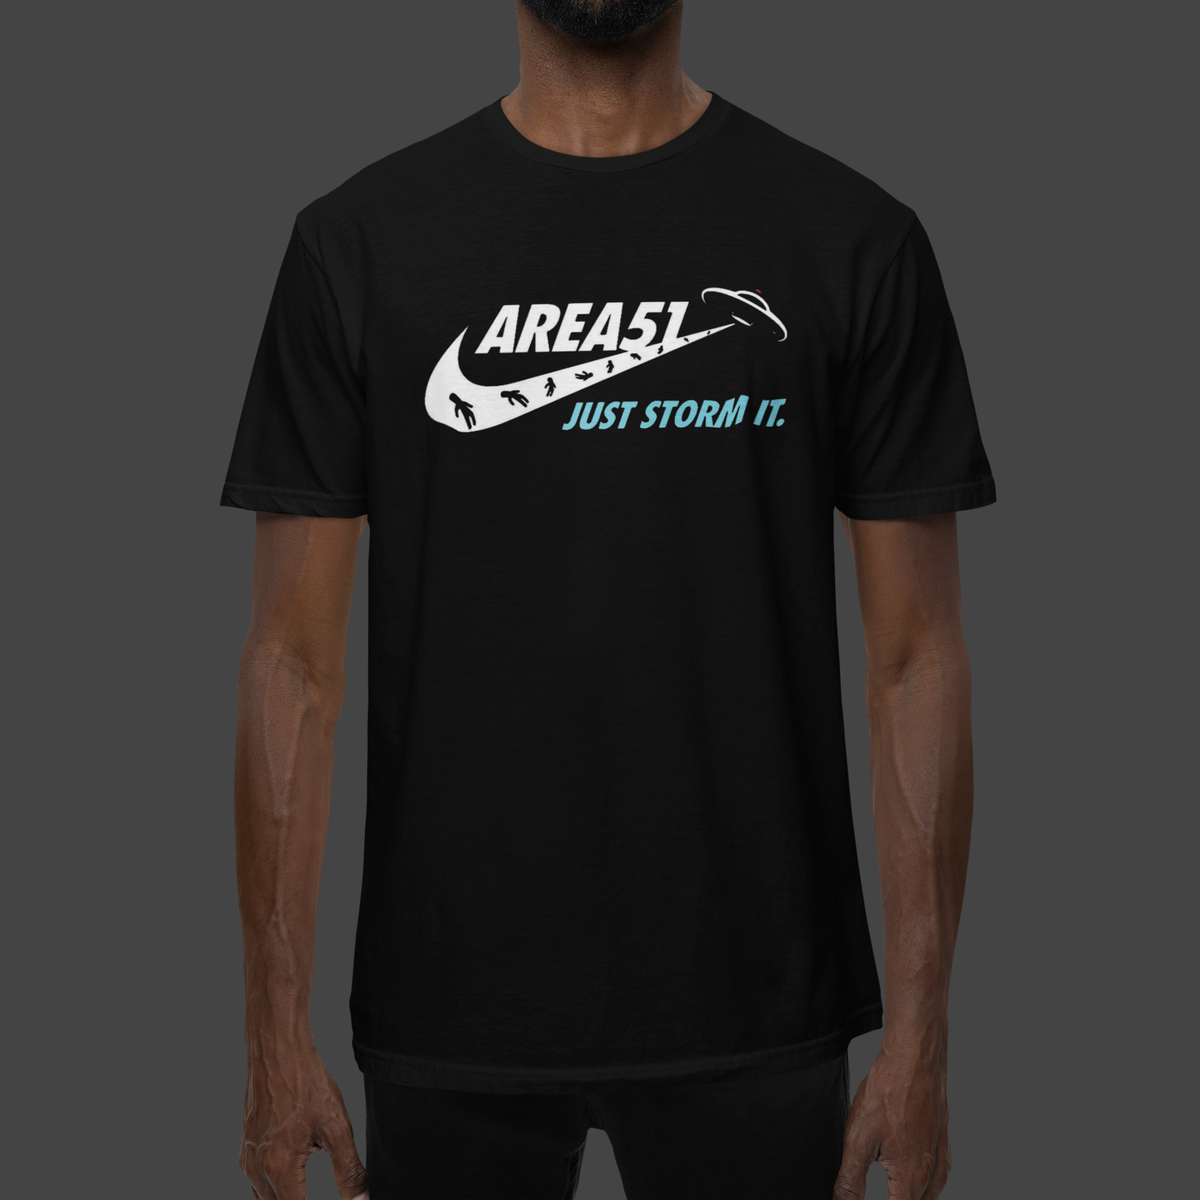 Nome do produto: Camiseta Area 51 Versa